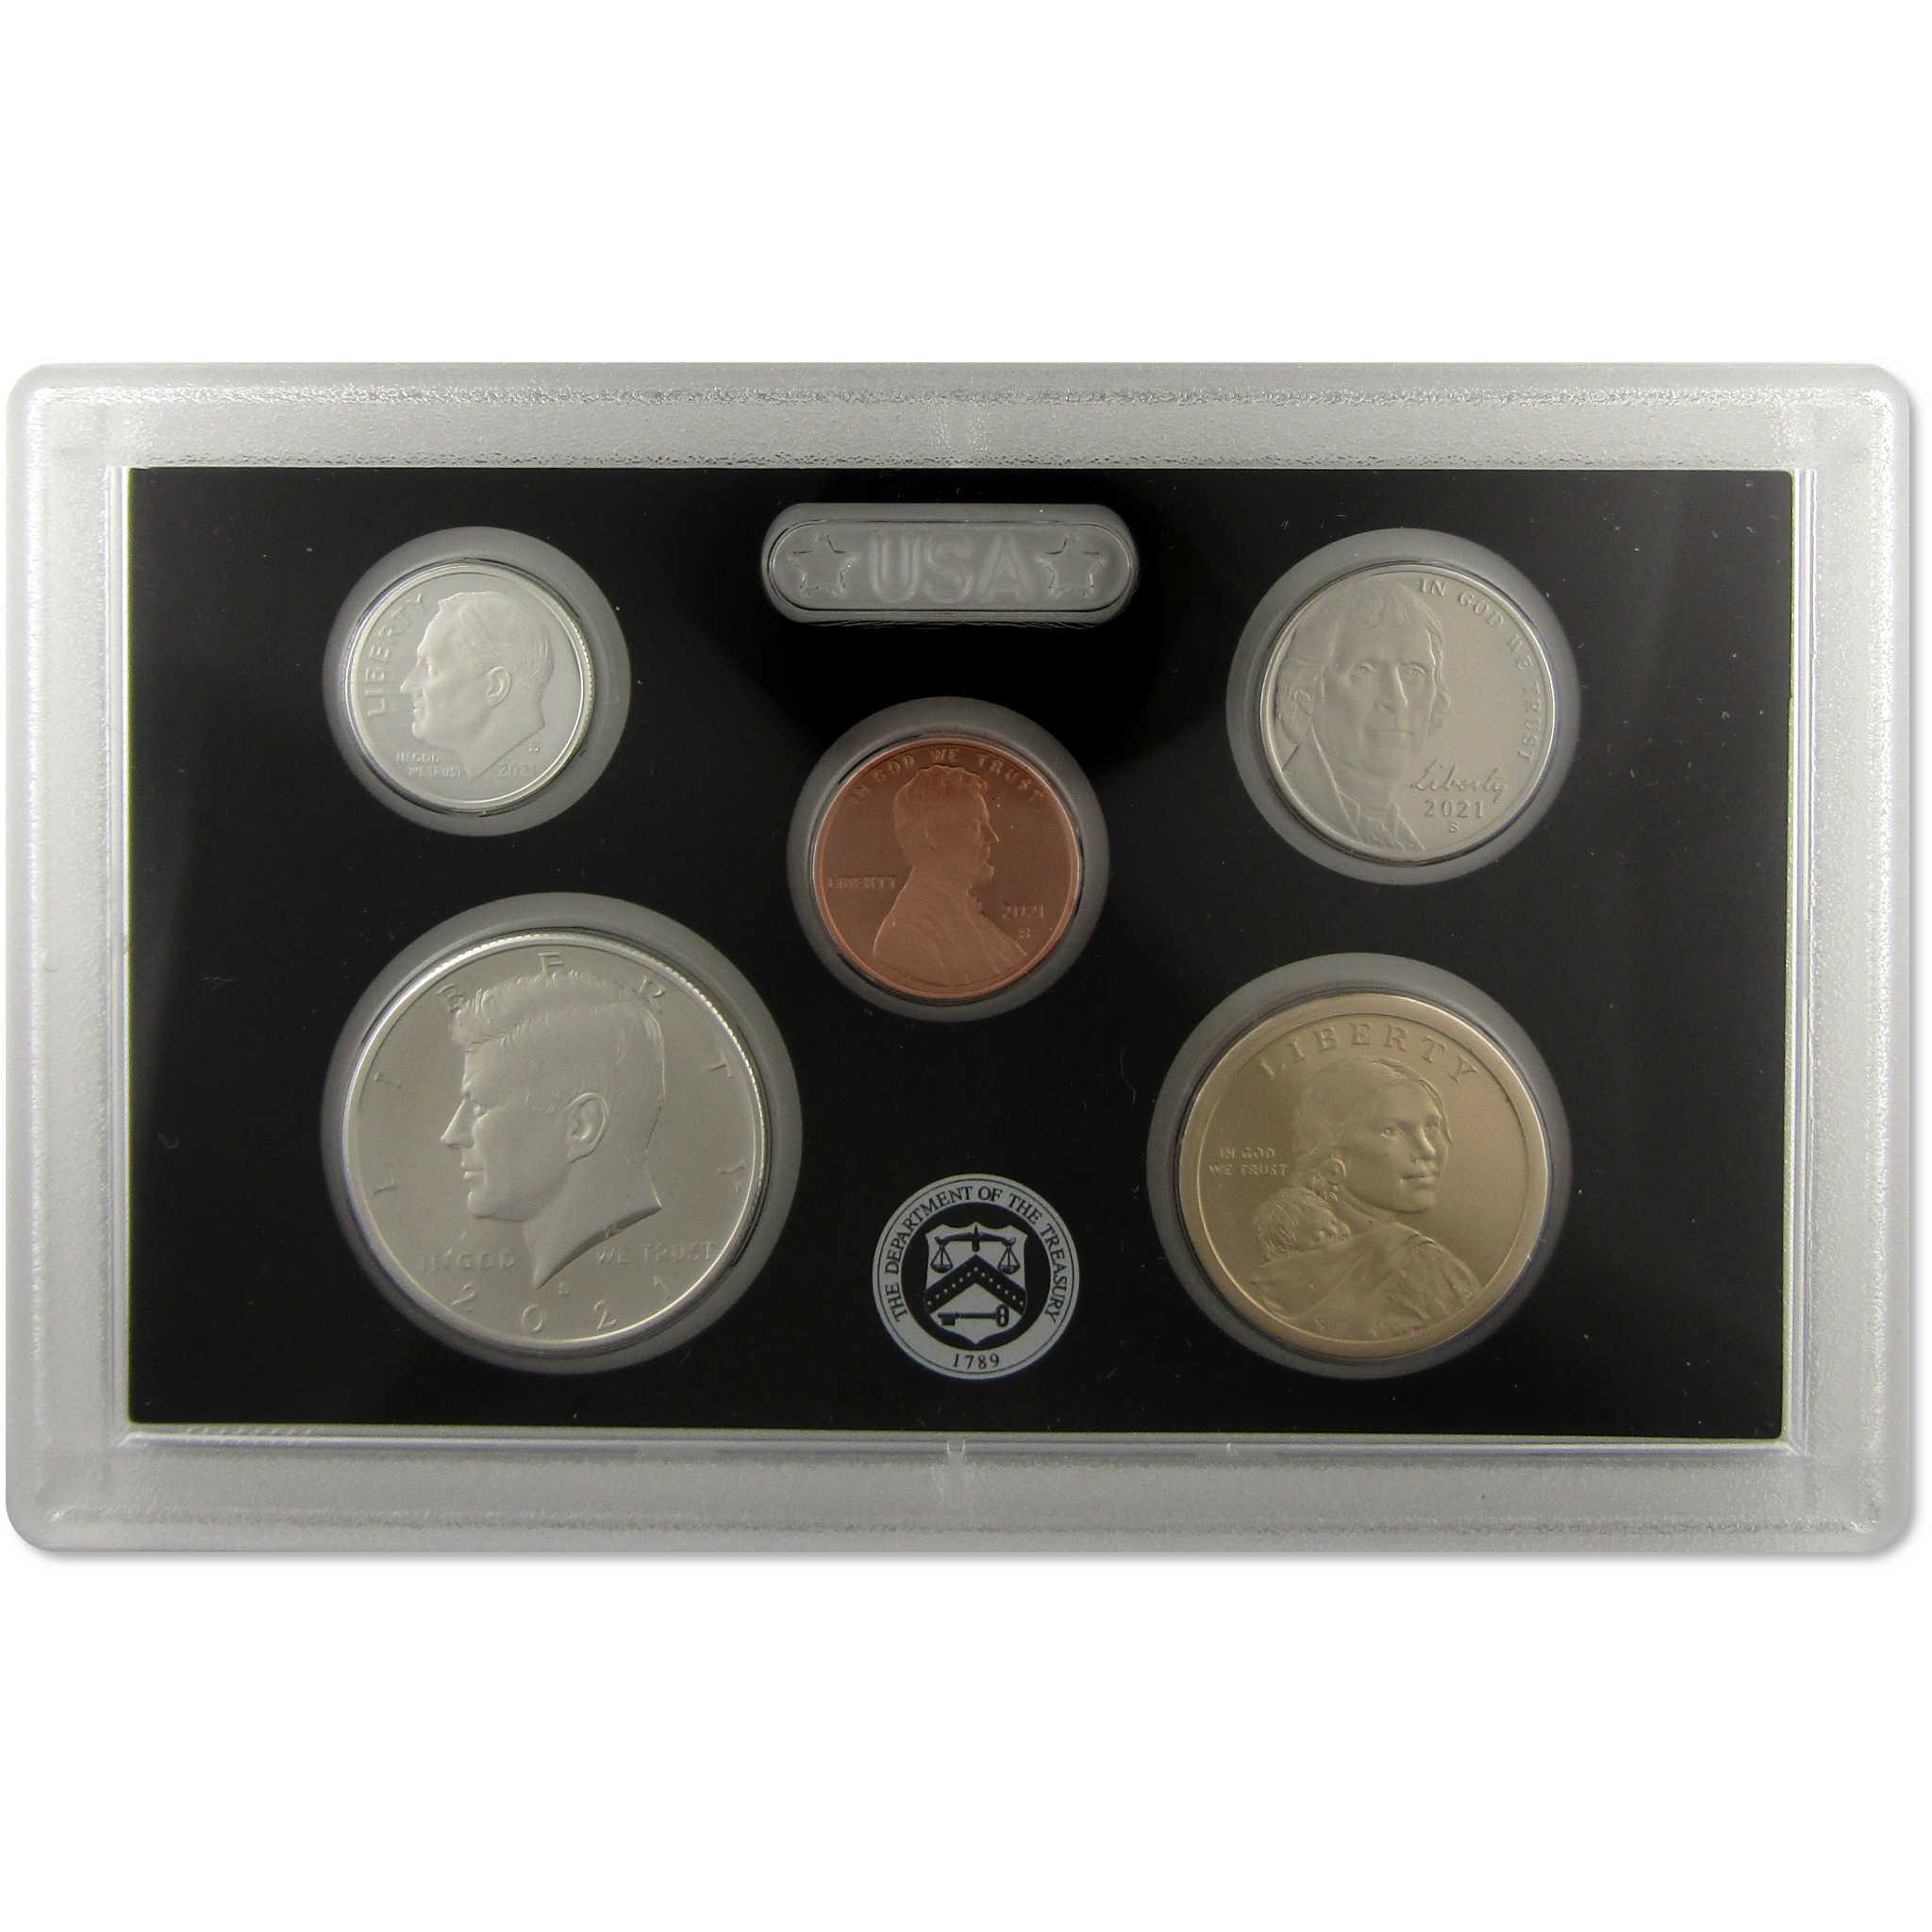 2021 Silver Proof Set U.S Mint Original Government Packaging OGP COA